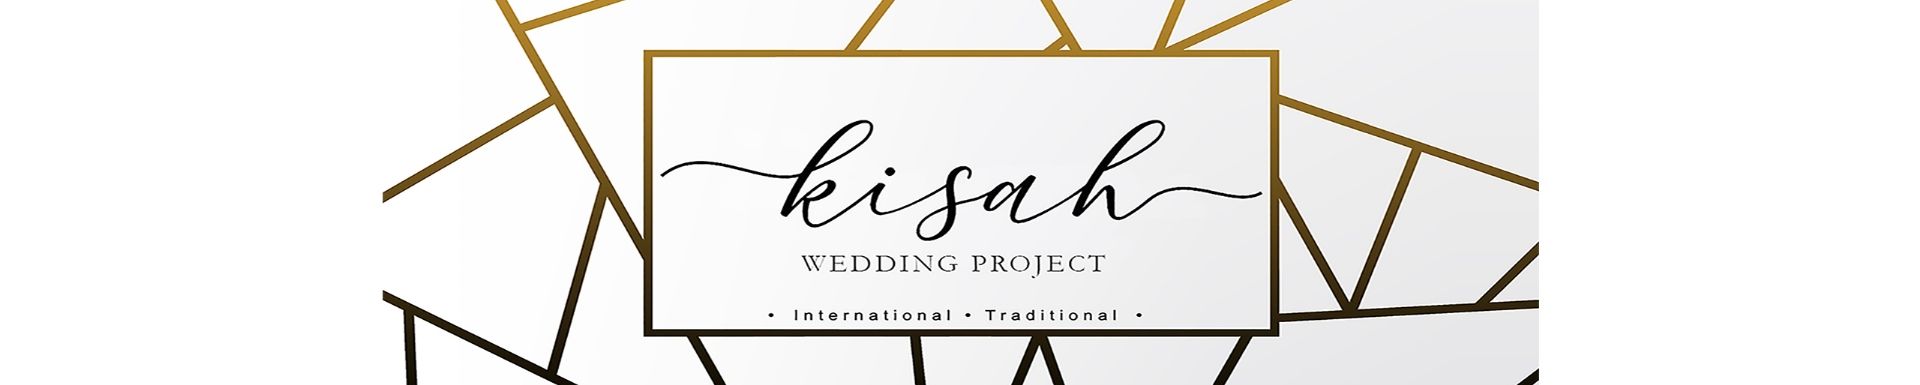 Kisah Wedding Project